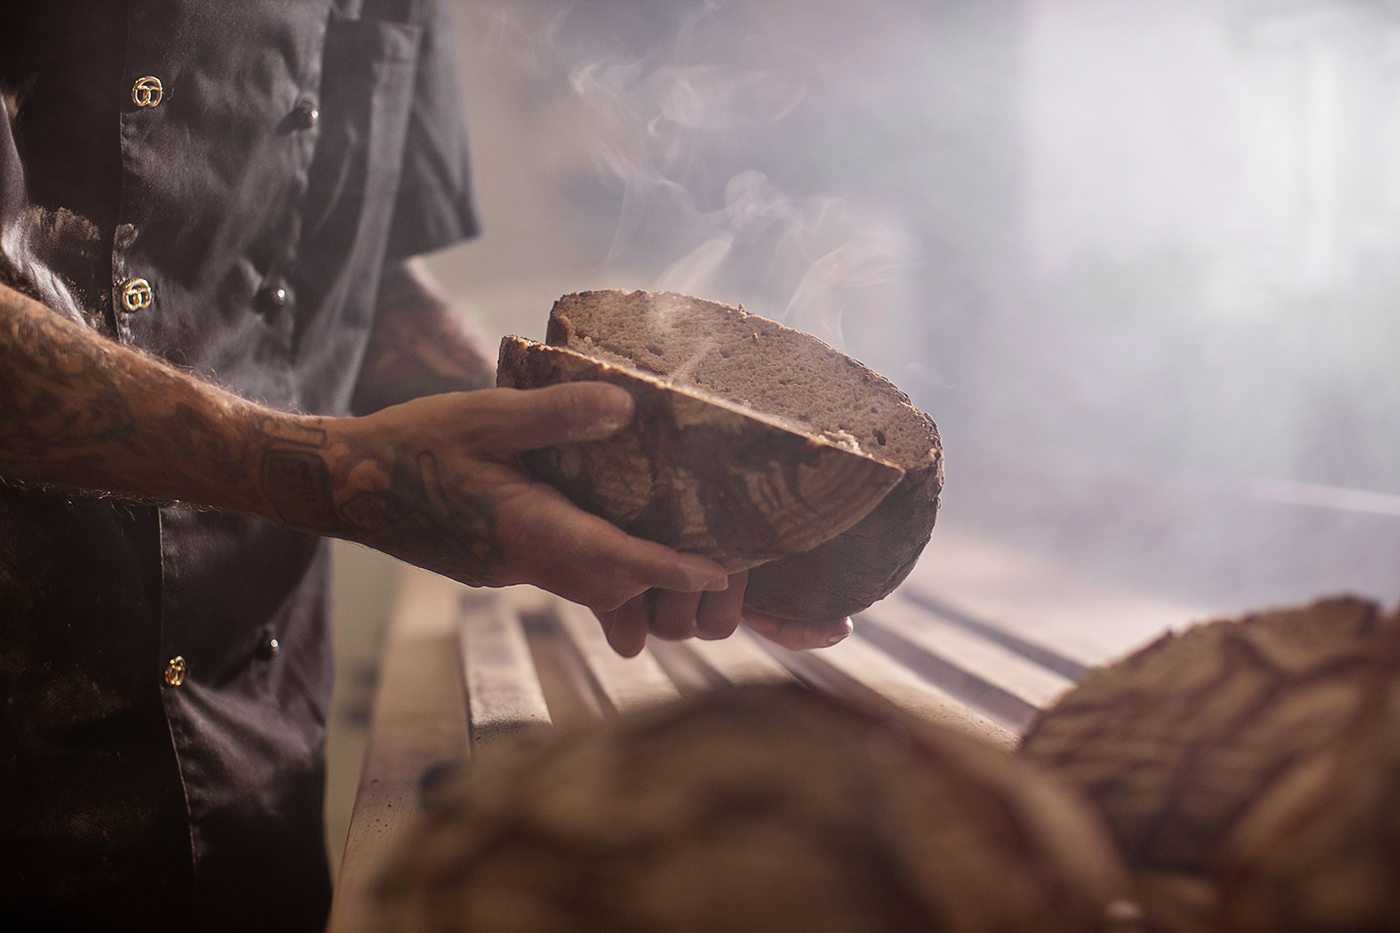 photograf-reportage-munich-handcraft-commercial-bakery-men-work-production-helgeroeske-behance11